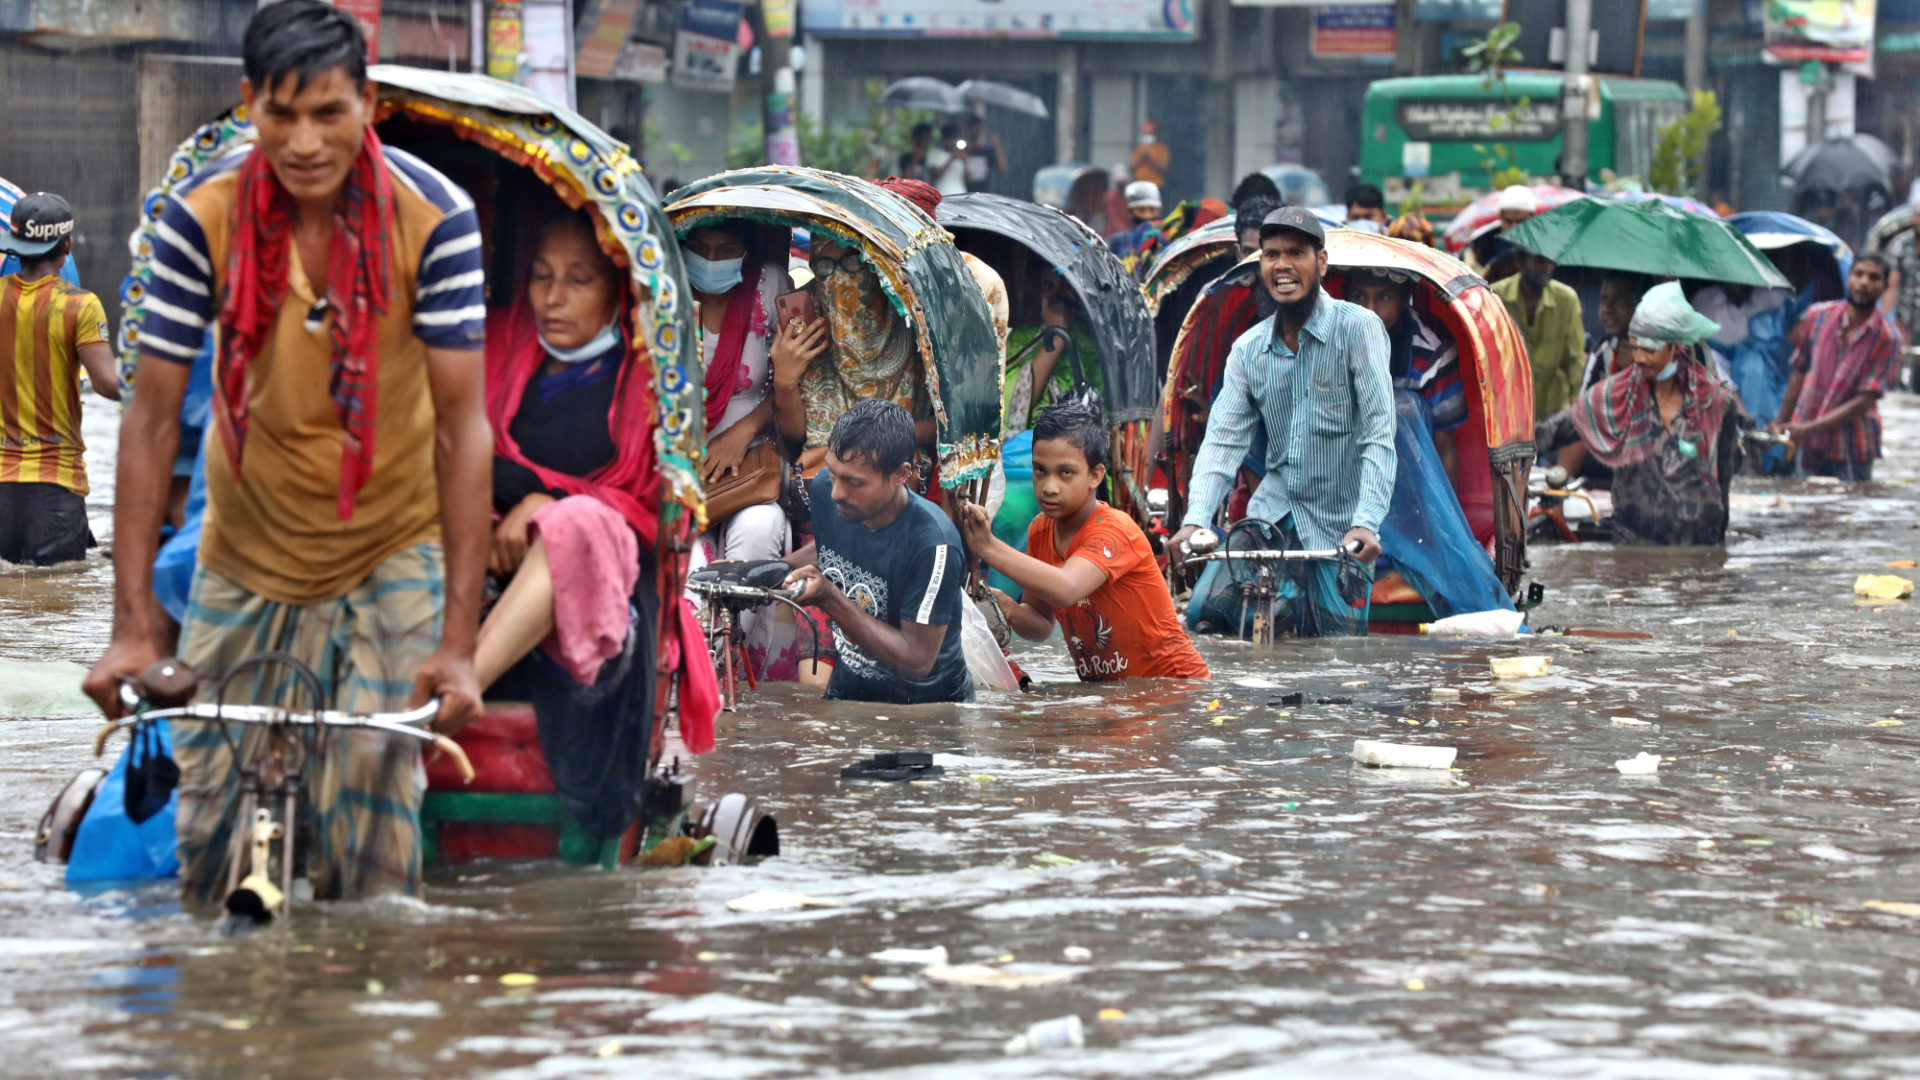 https://roarmag.org/wp-content/uploads/2020/12/Bangladesh-flooding-2K-1920x1080.jpg